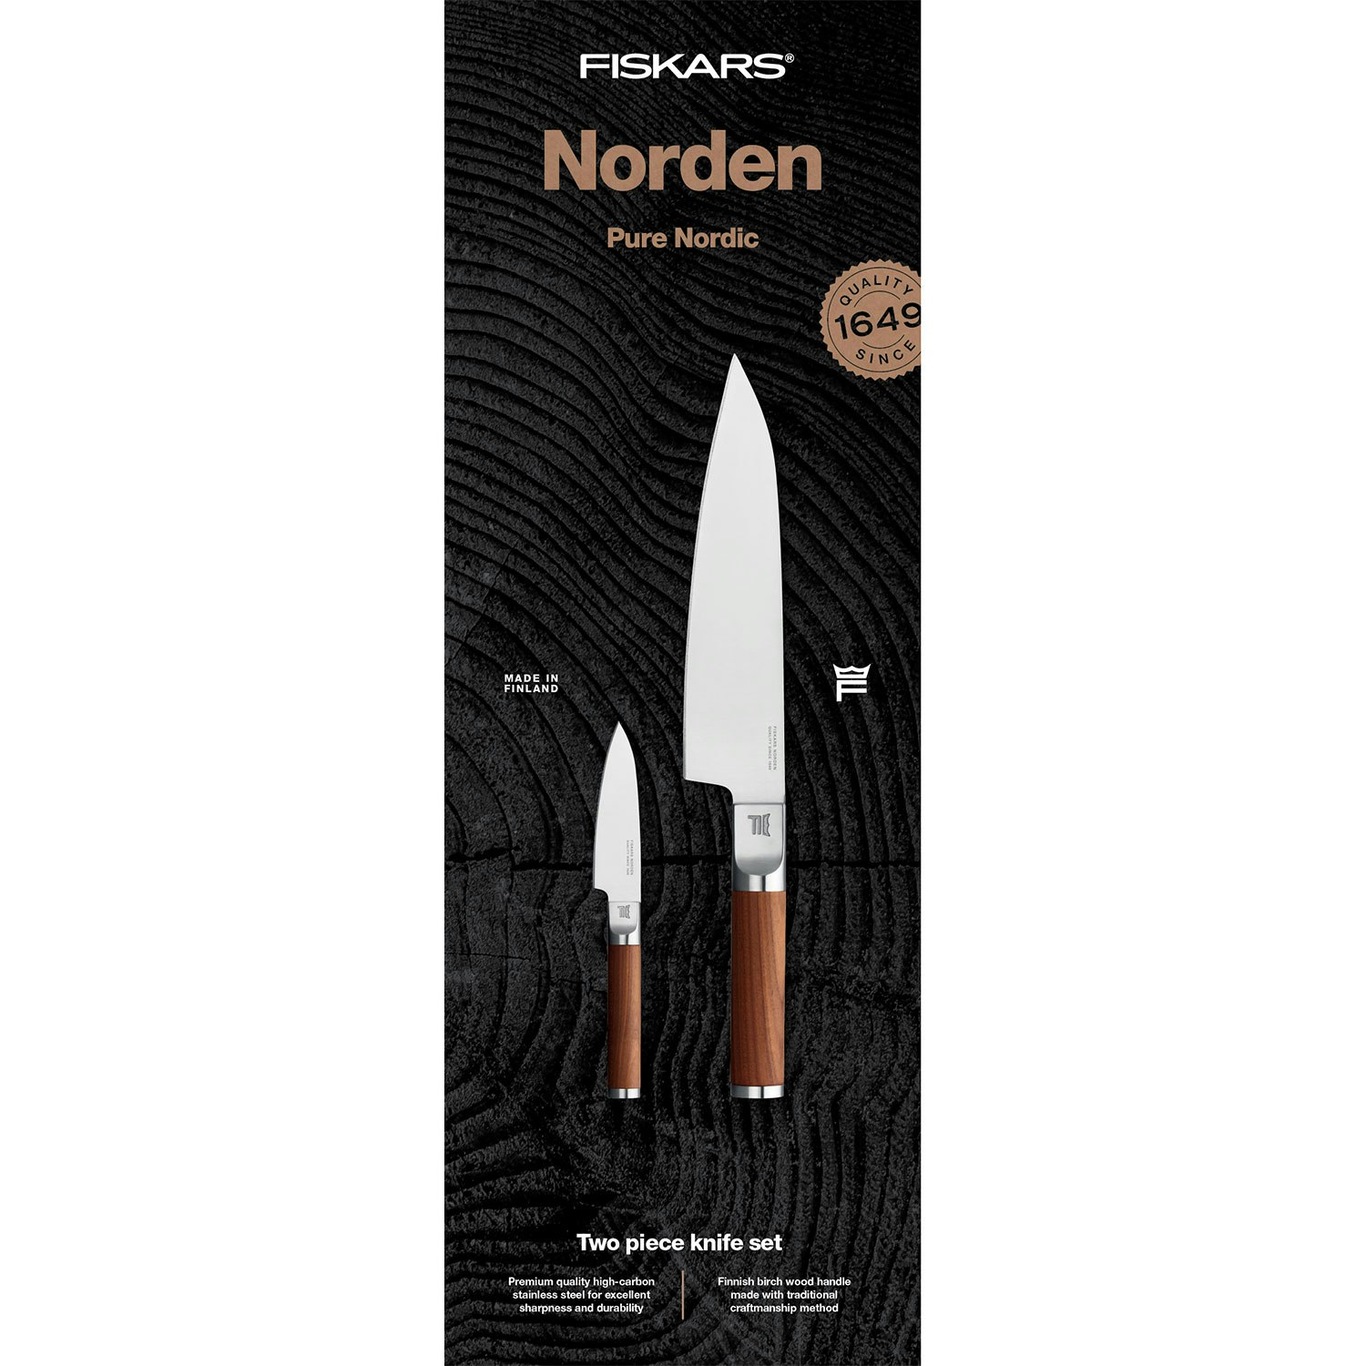 https://royaldesign.com/image/2/fiskars-norden-knife-set-2-pcs-0?w=800&quality=80